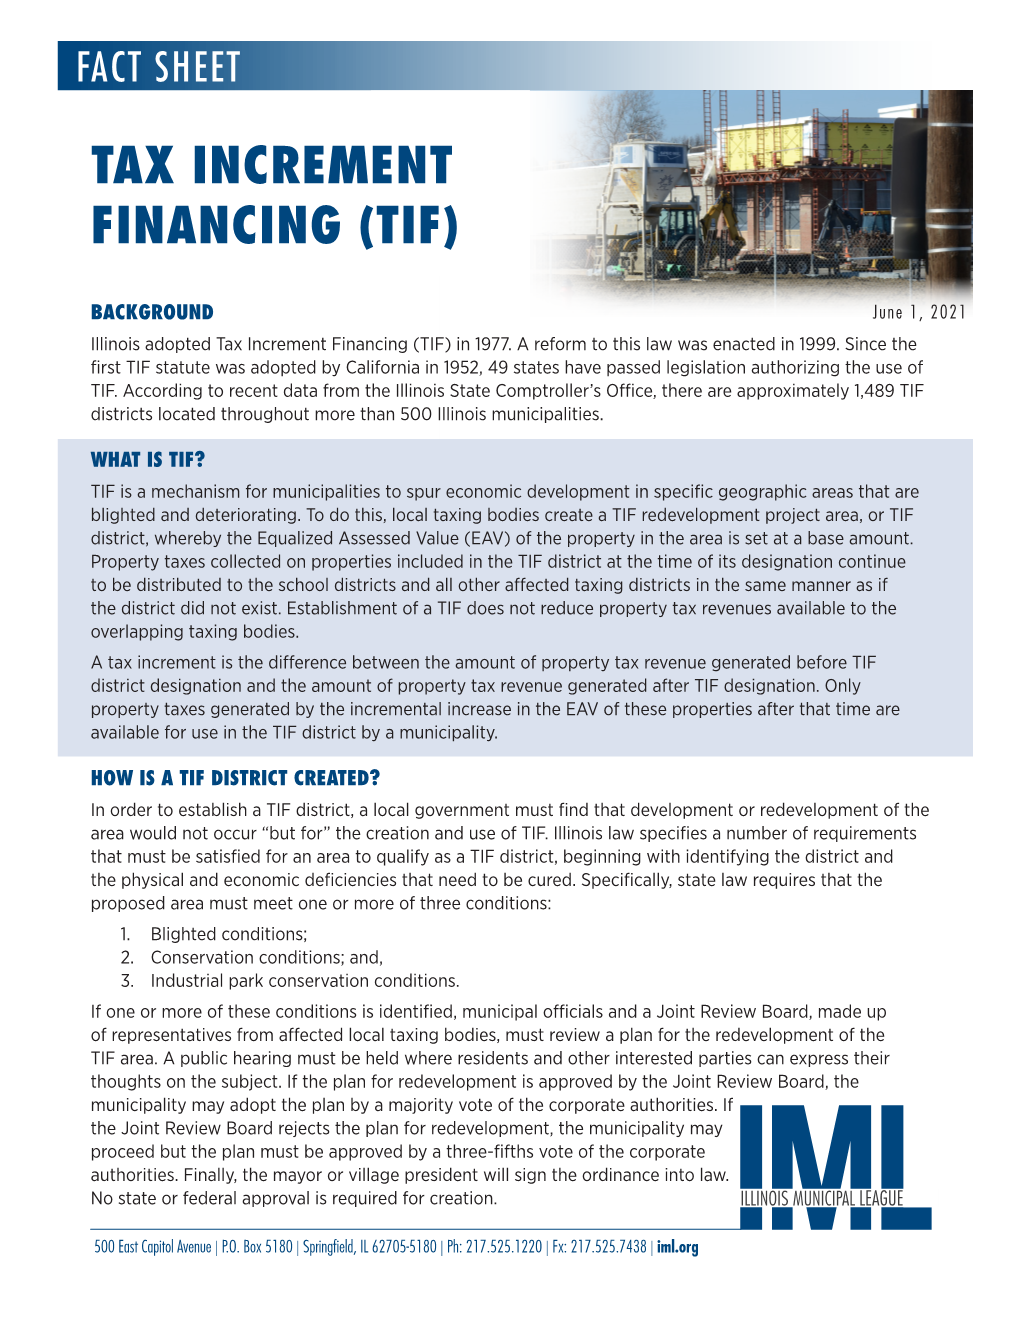 Tax Increment Financing (Tif)